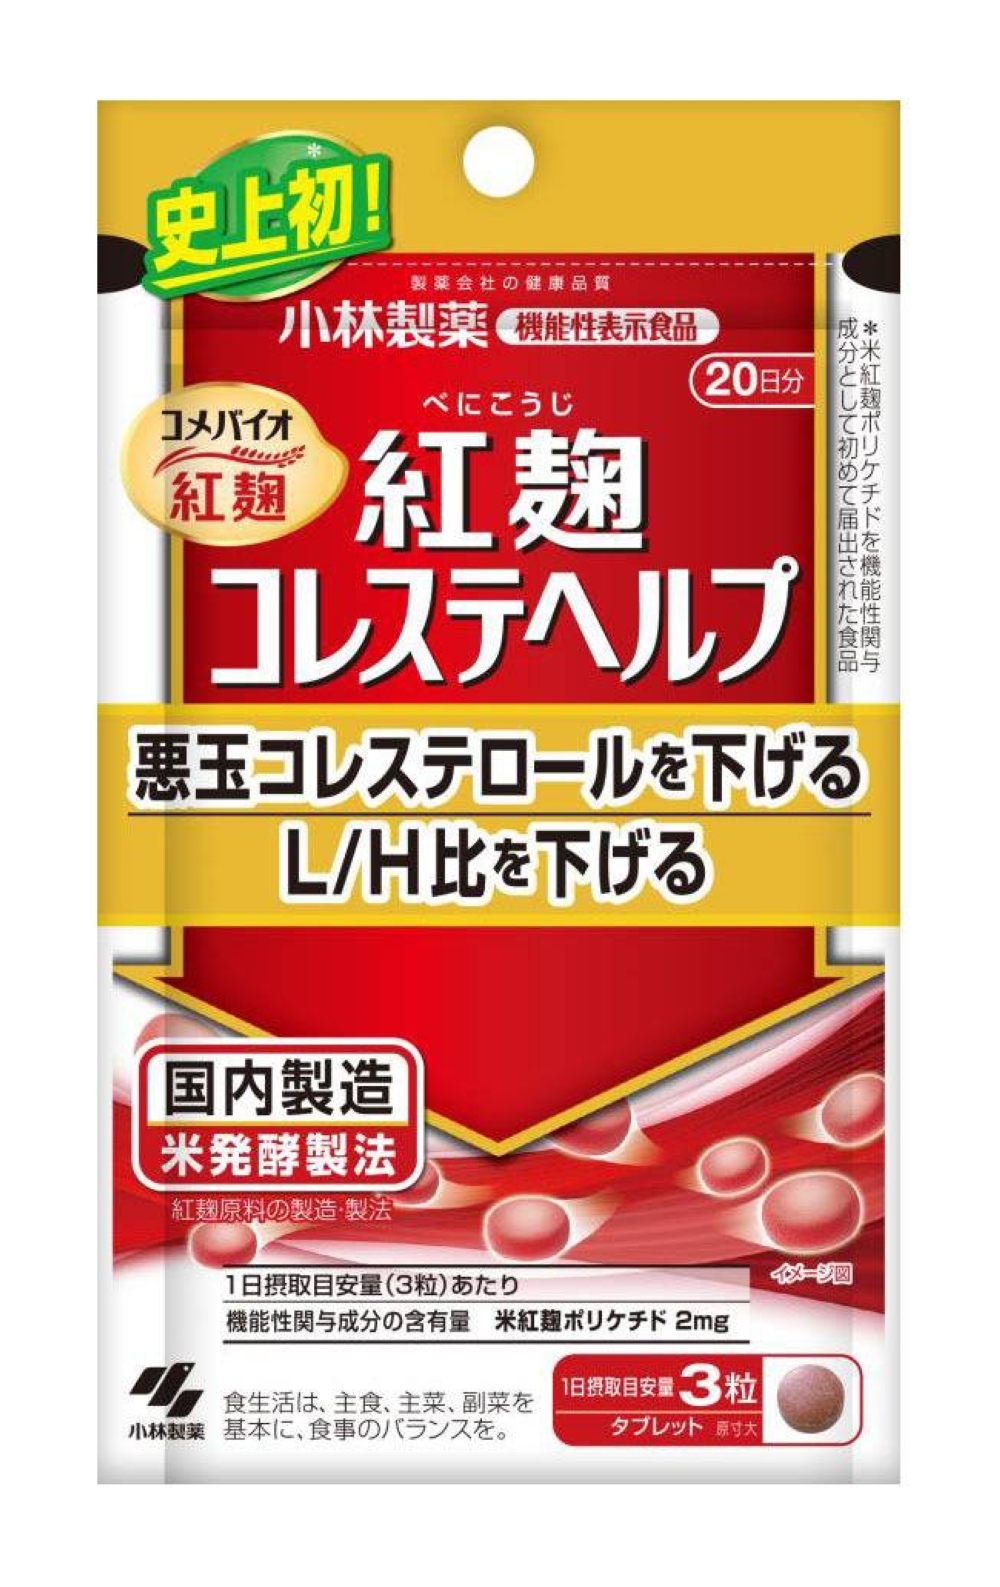 Kobayashi Pharmaceutical is voluntarily recalling five products, including about 300,000 packages of Beni Koji Choleste (pictured). /Photo courtesy Kobayashi Pharmaceutical